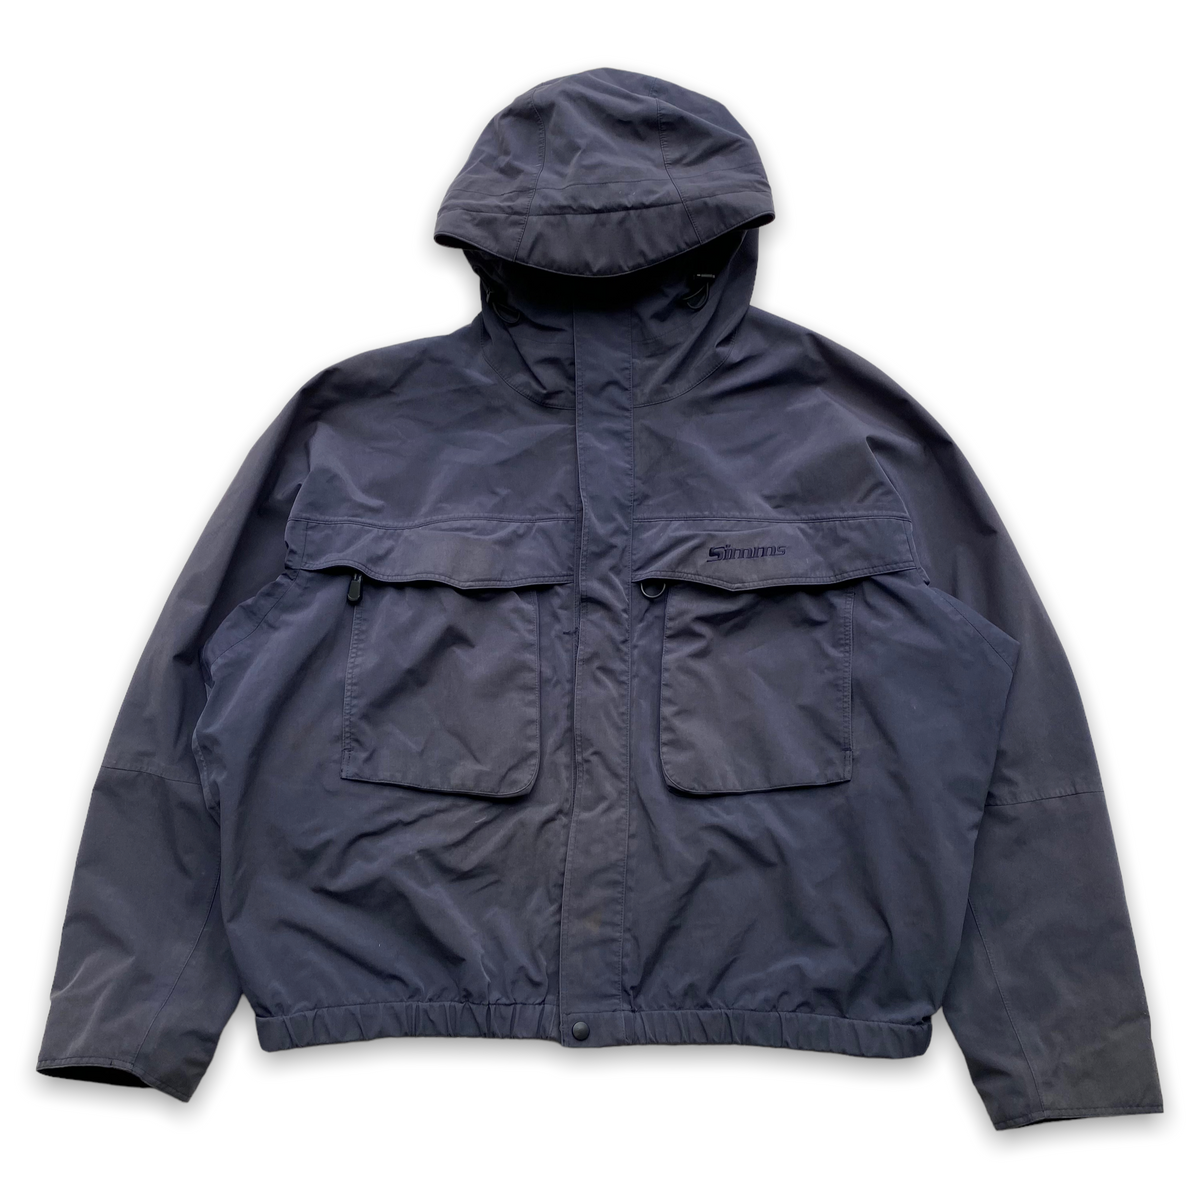 Simms dry coat wading jacket L/XL – Vintage Sponsor